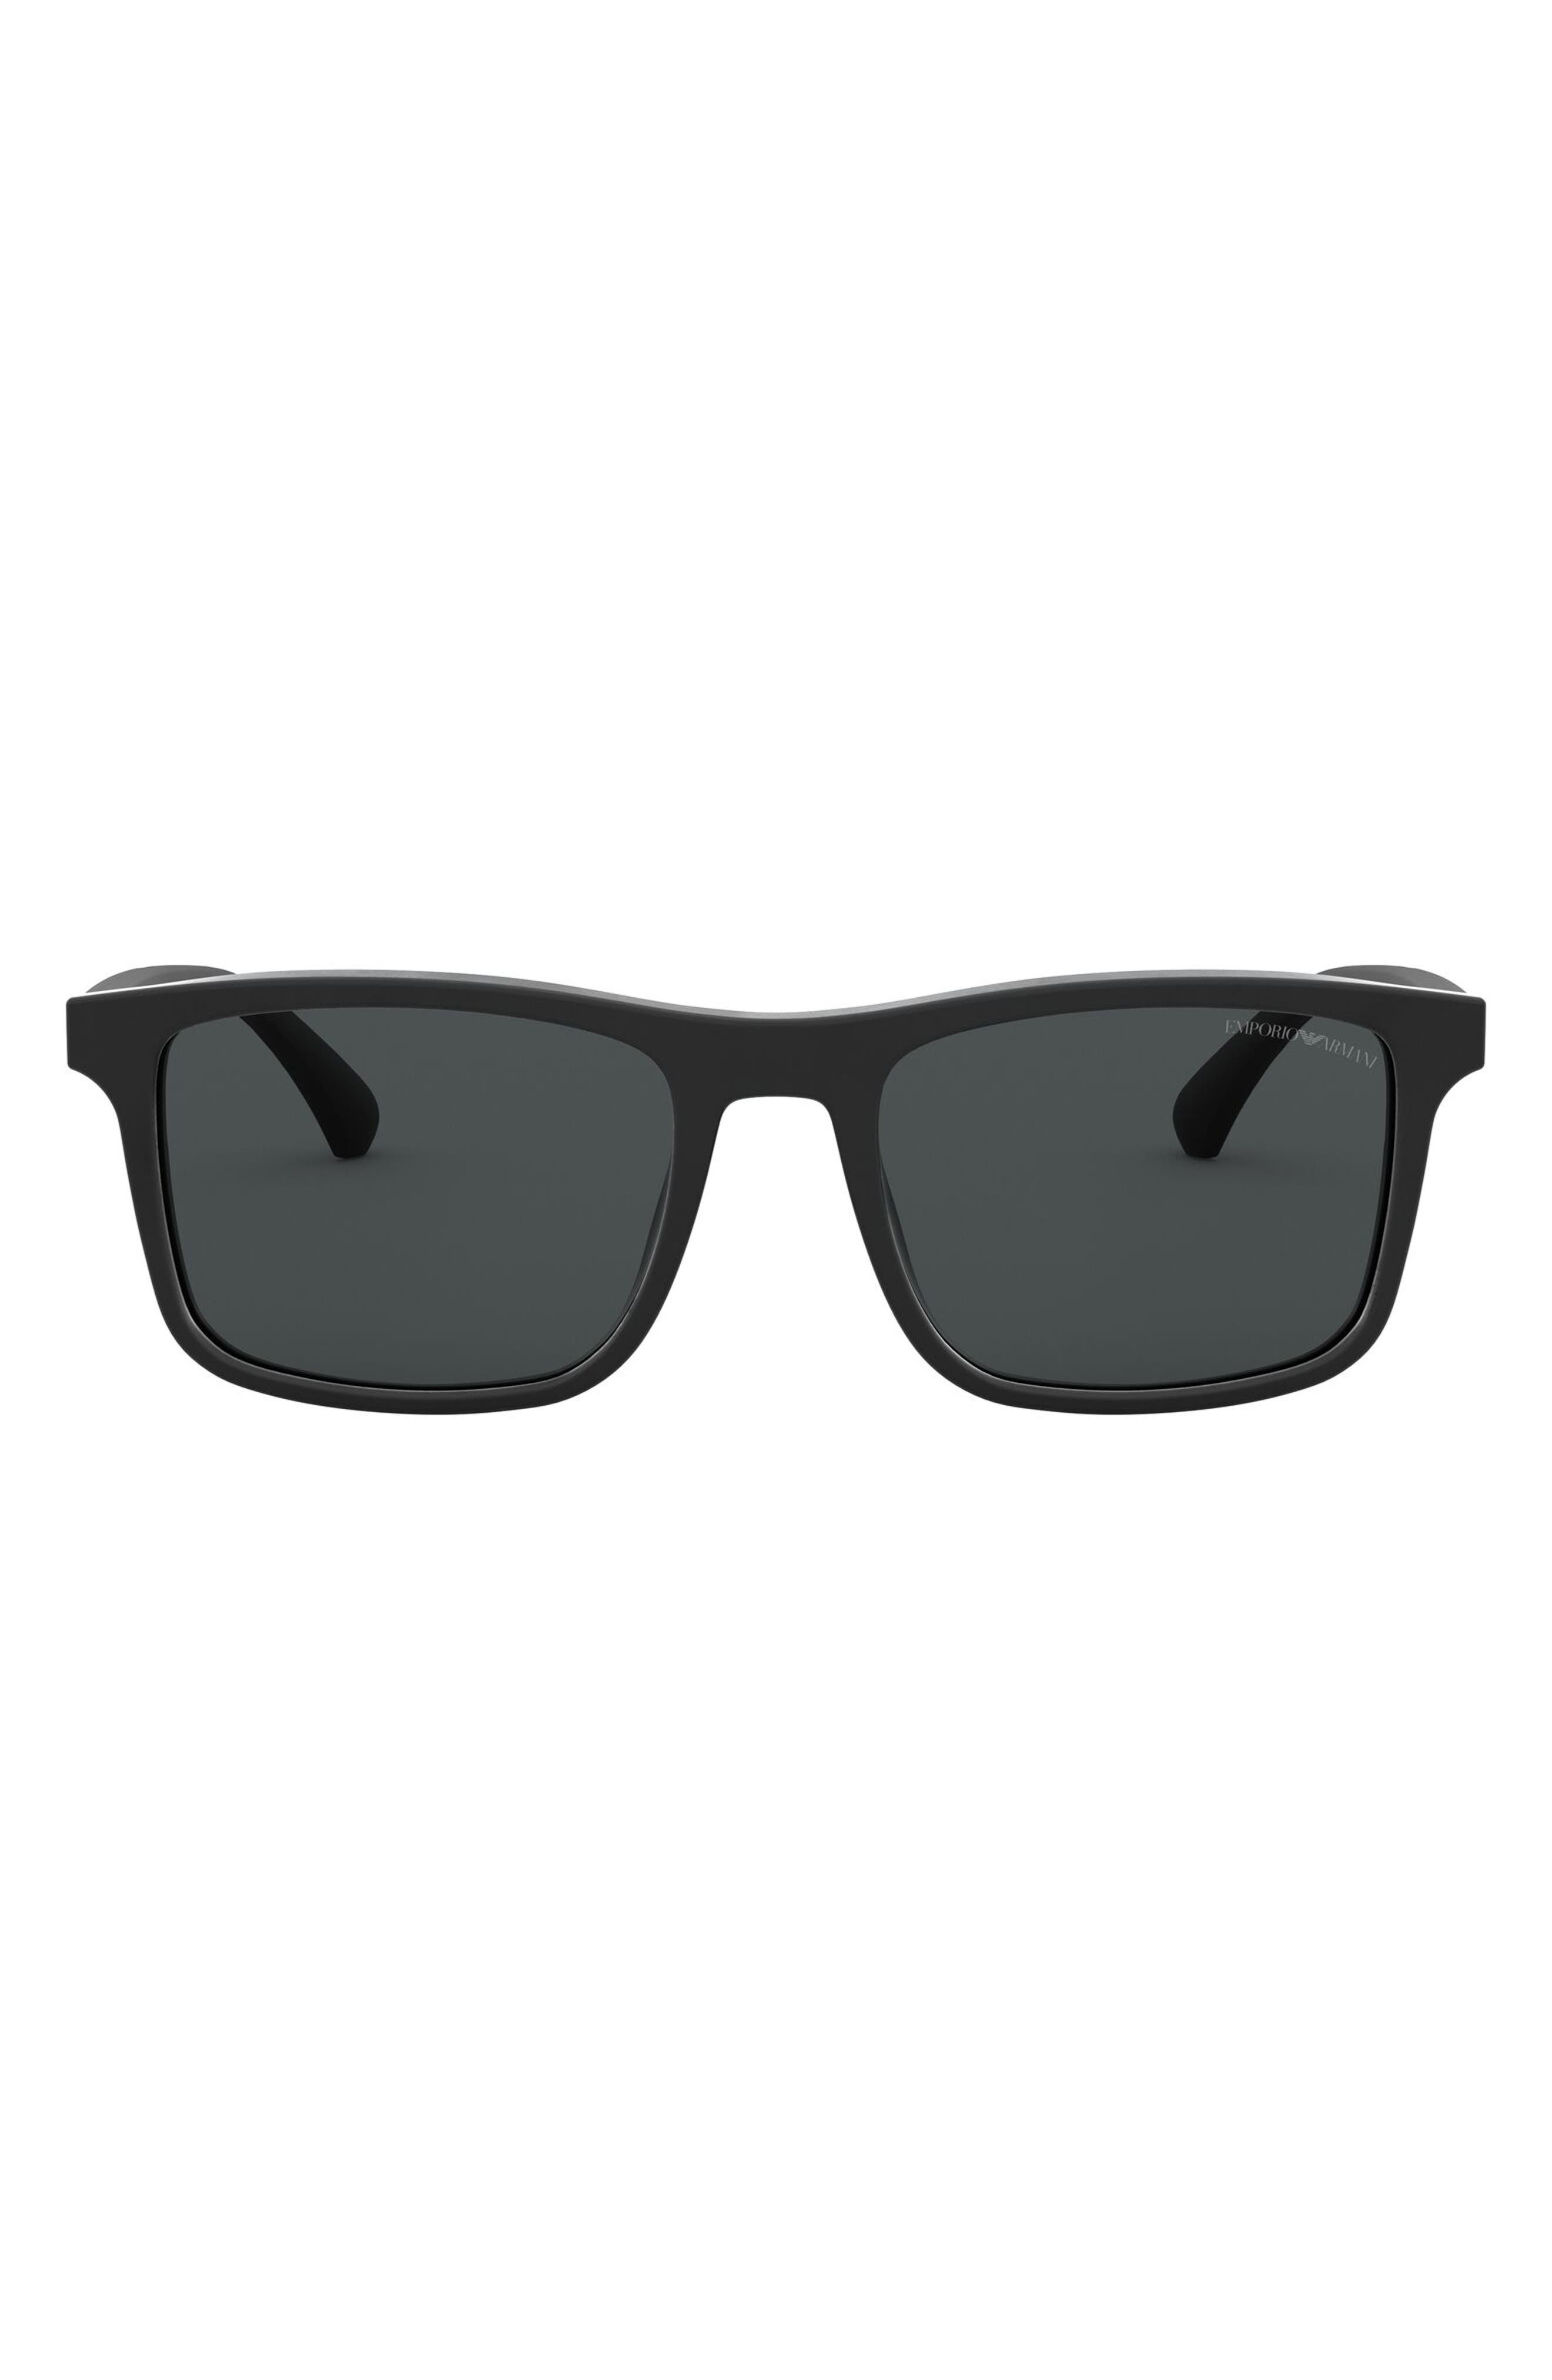 Dolce & Gabbana 60mm Rectangular Sunglasses in Black at Nordstrom